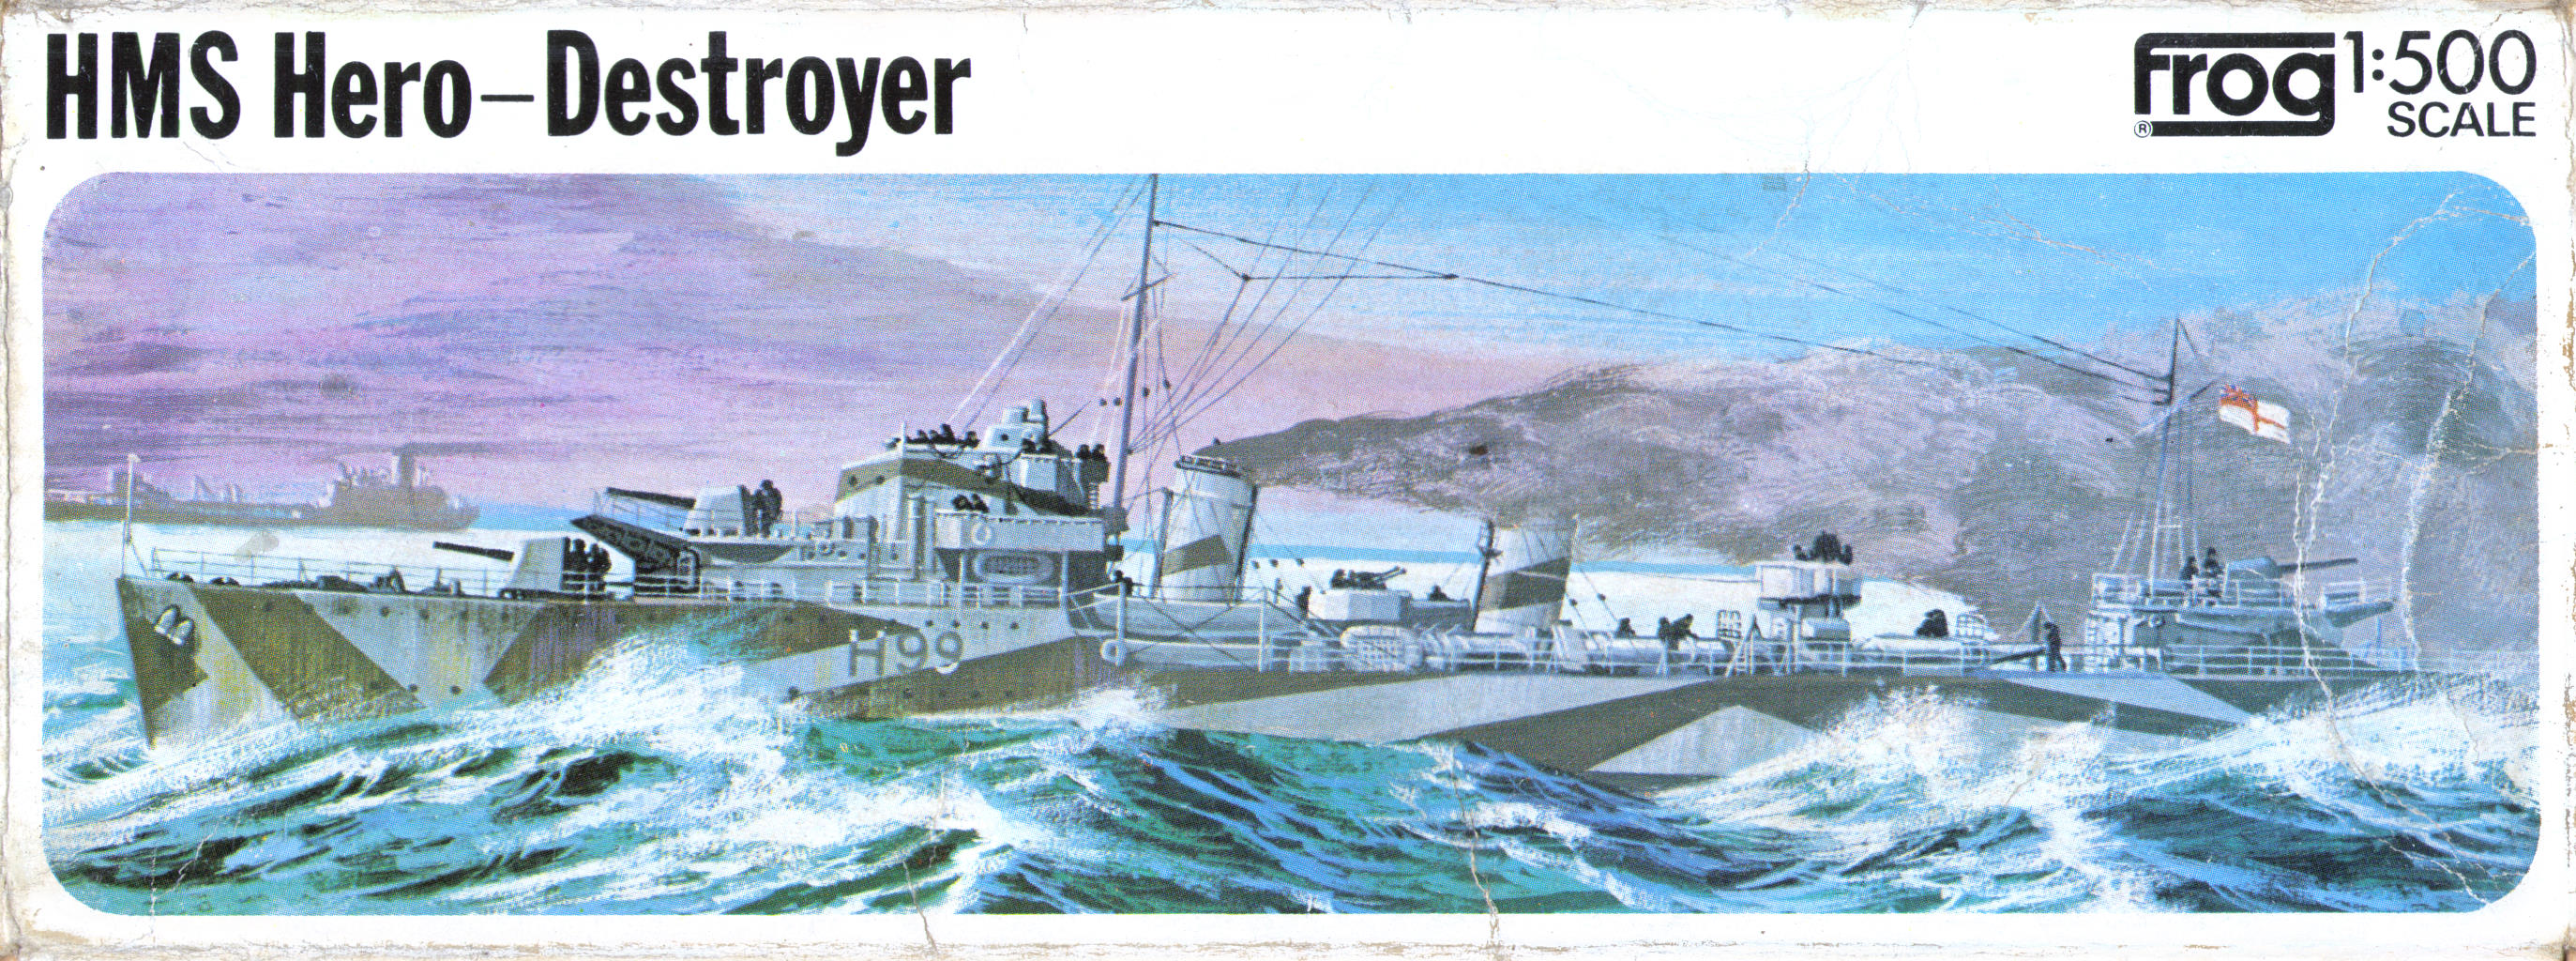 Коробка FROG F124 HMS Hero Destroyer, Rovex Models&Hobbies, 1975